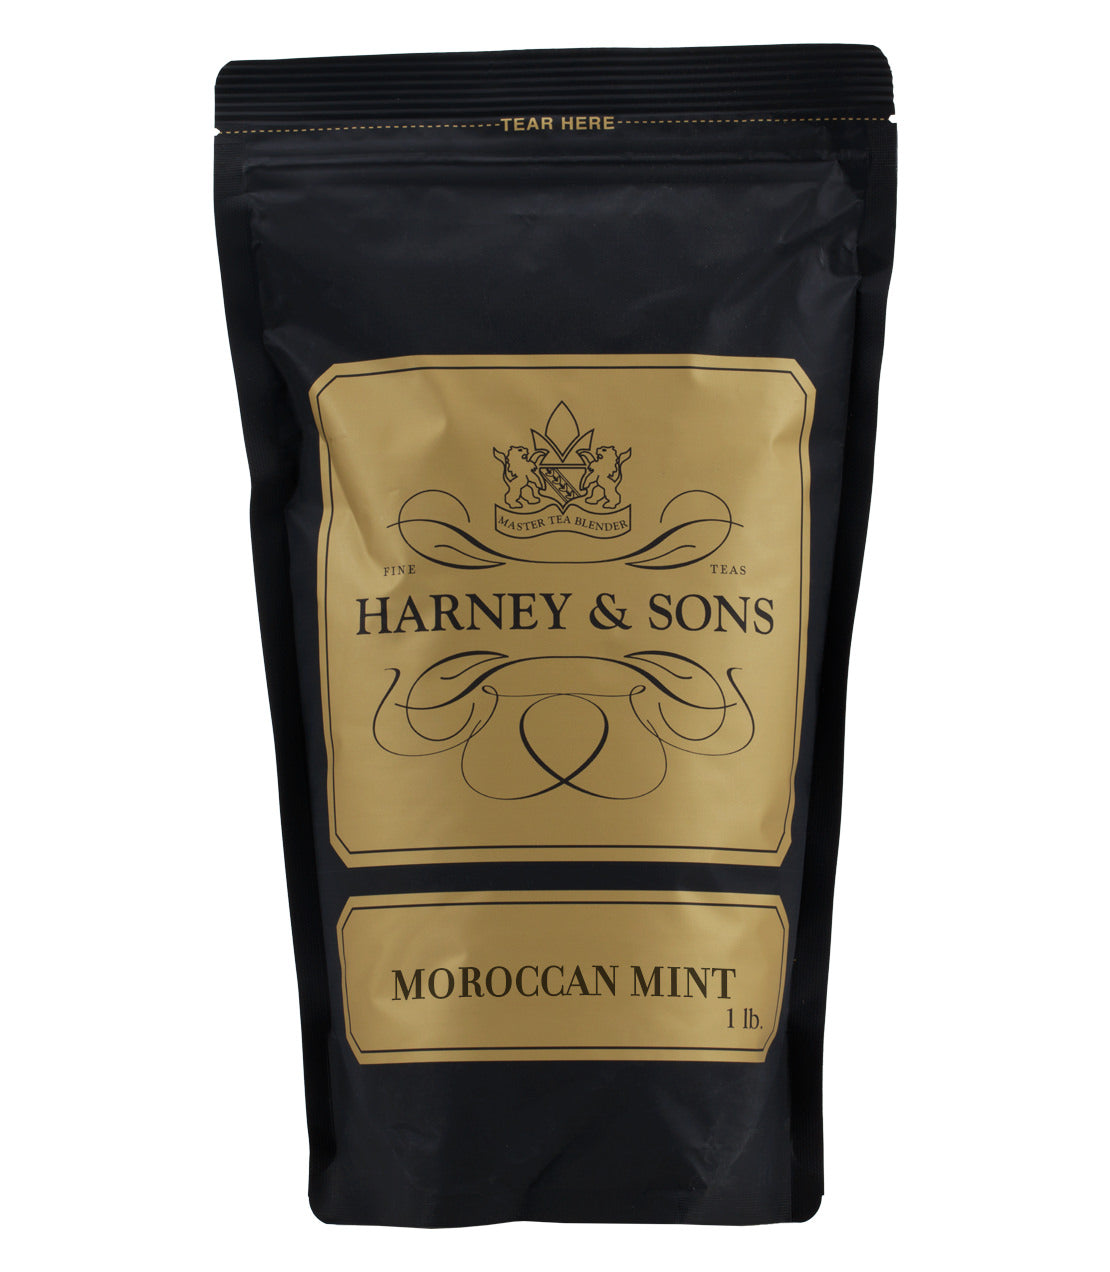 Organic Moroccan Mint - Loose 1 lb. Bag - Harney & Sons Fine Teas